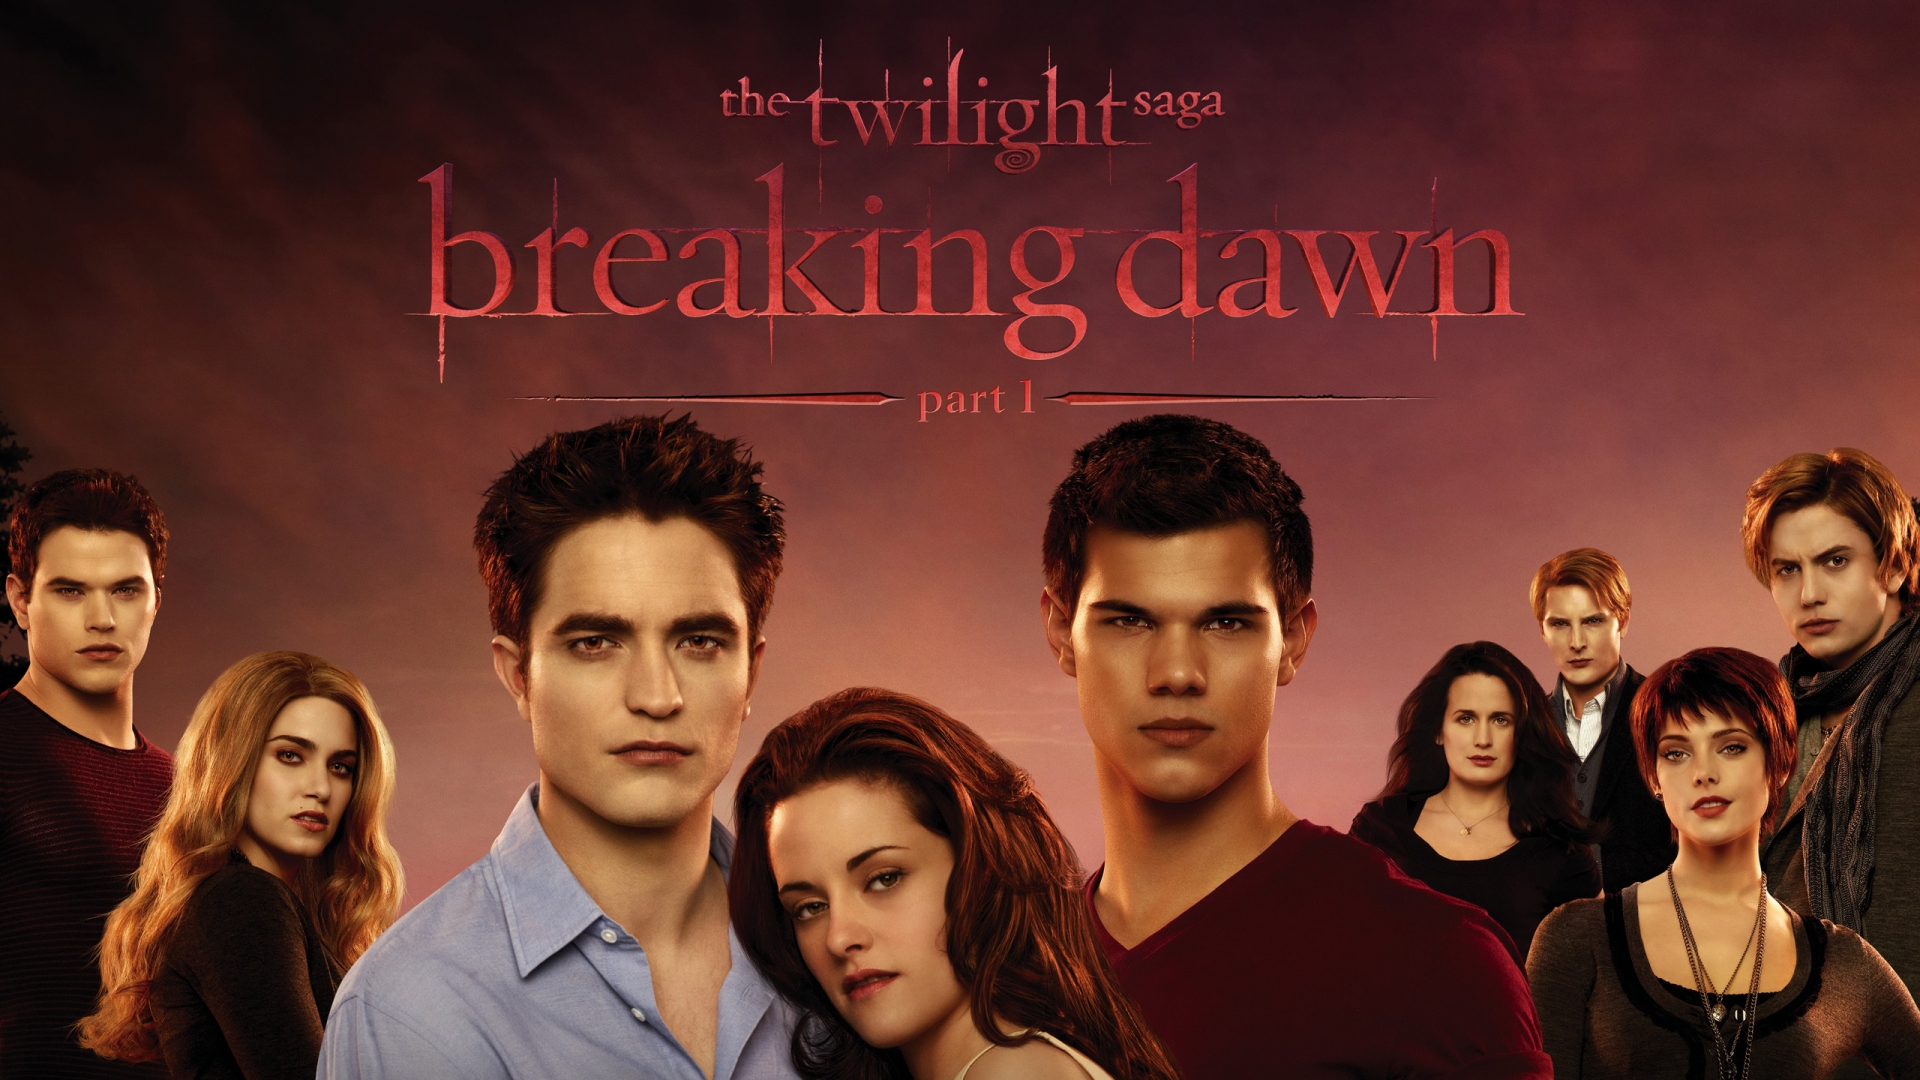 The Twilight Saga Breaking Dawn Part 1 for 1920 x 1080 HDTV 1080p resolution